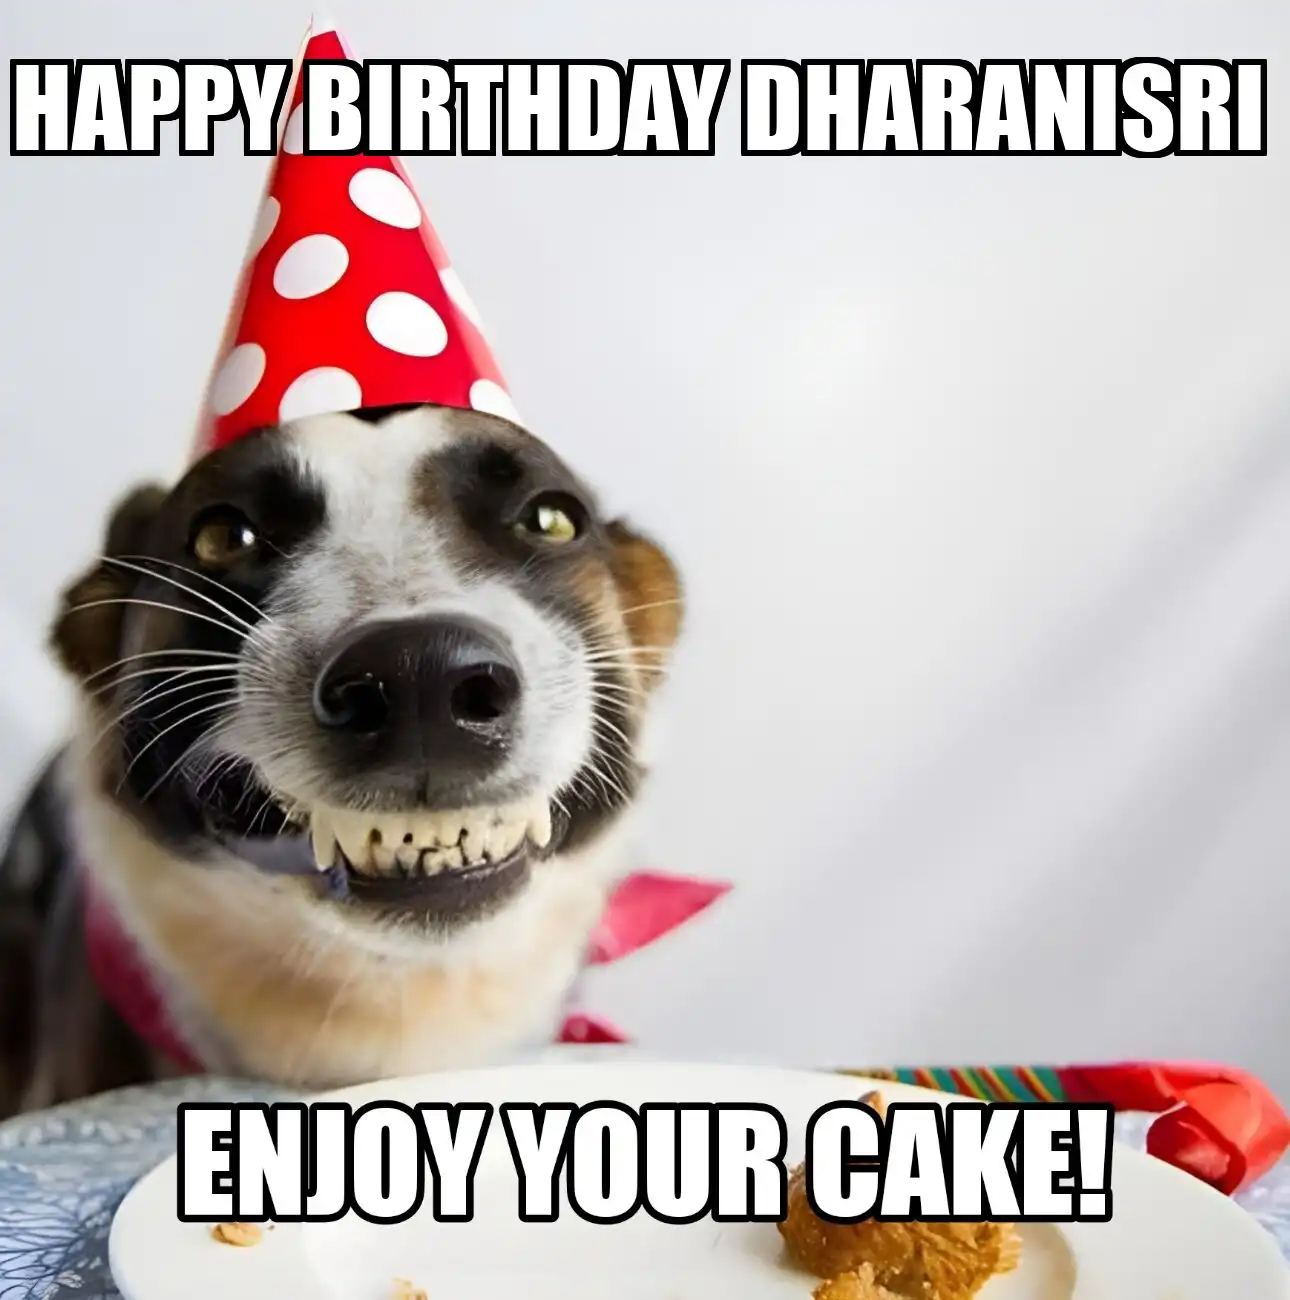 Happy Birthday Dharanisri Enjoy Your Cake Dog Meme